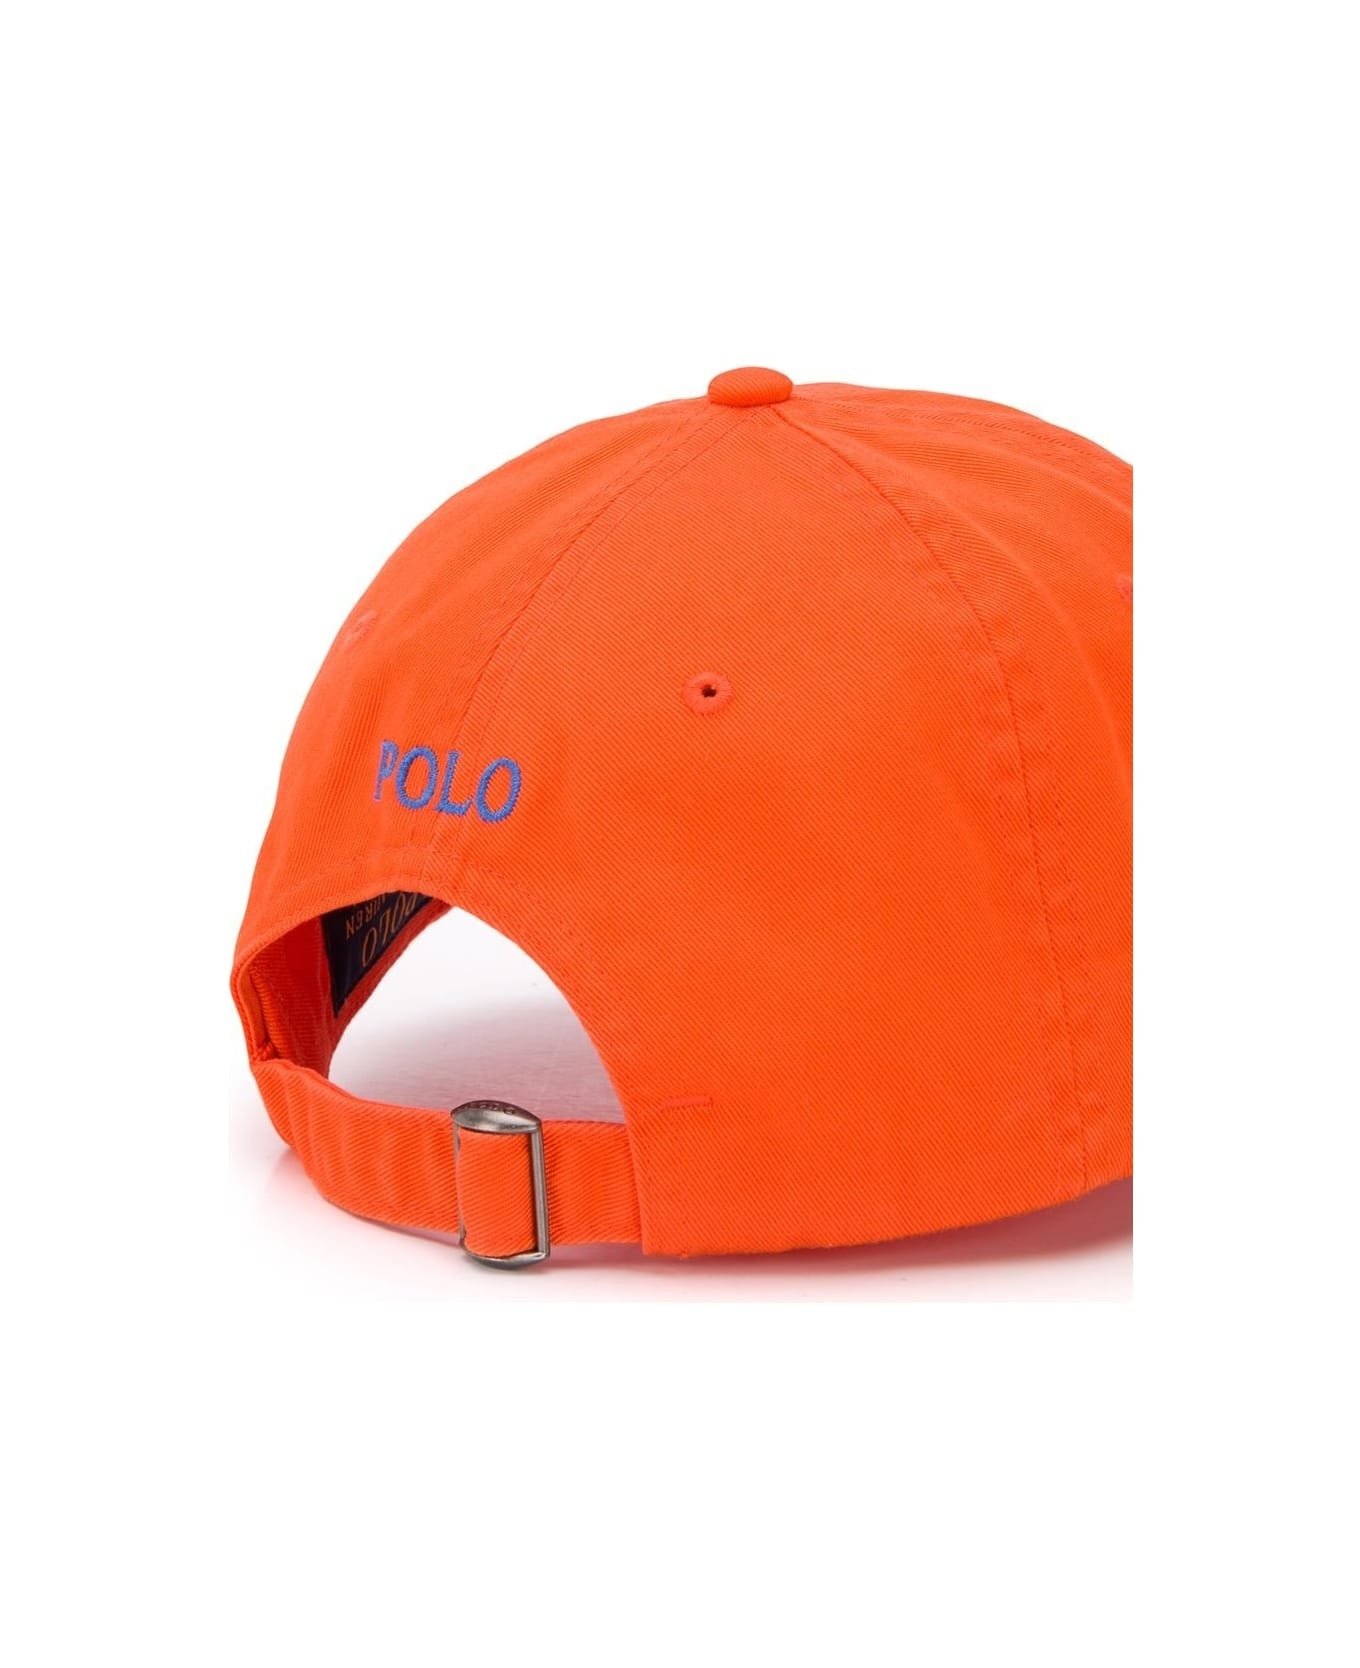 Orange Baseball Hat With Contrasting Pony - 2